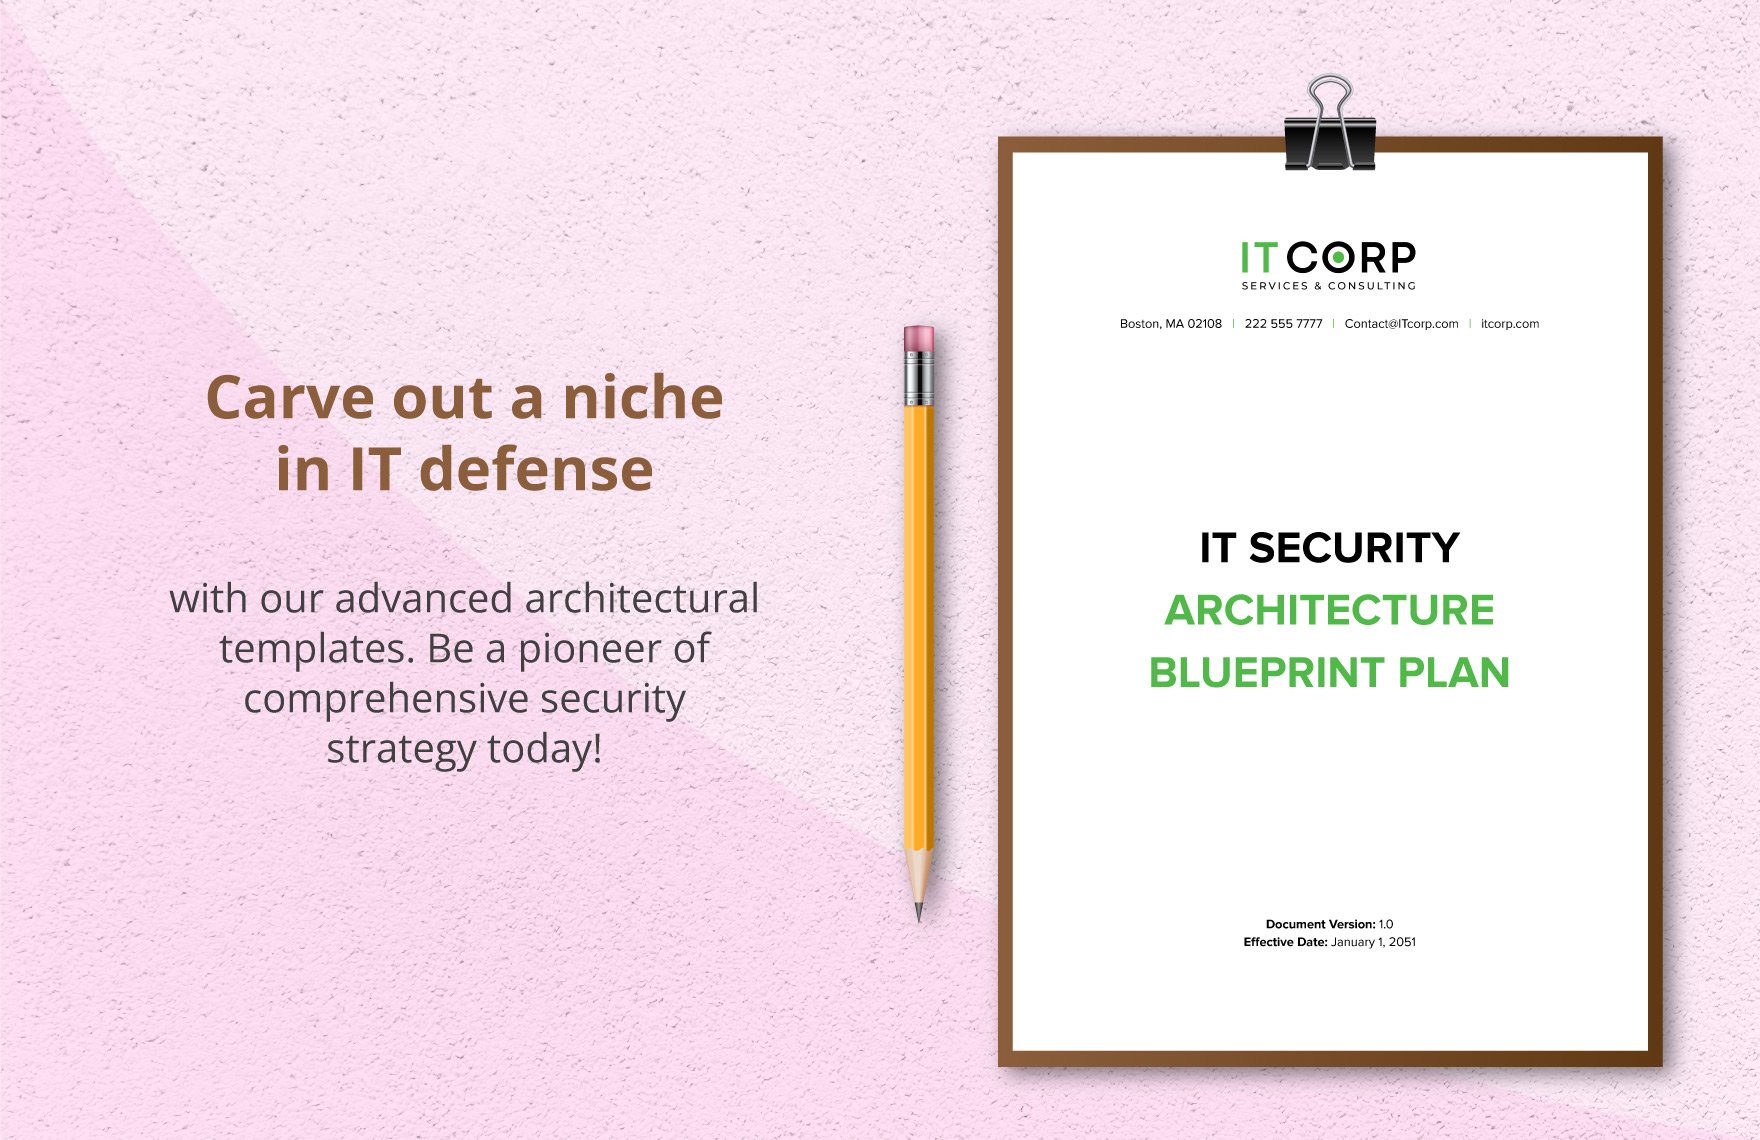 IT Security Architecture Blueprint Plan Template